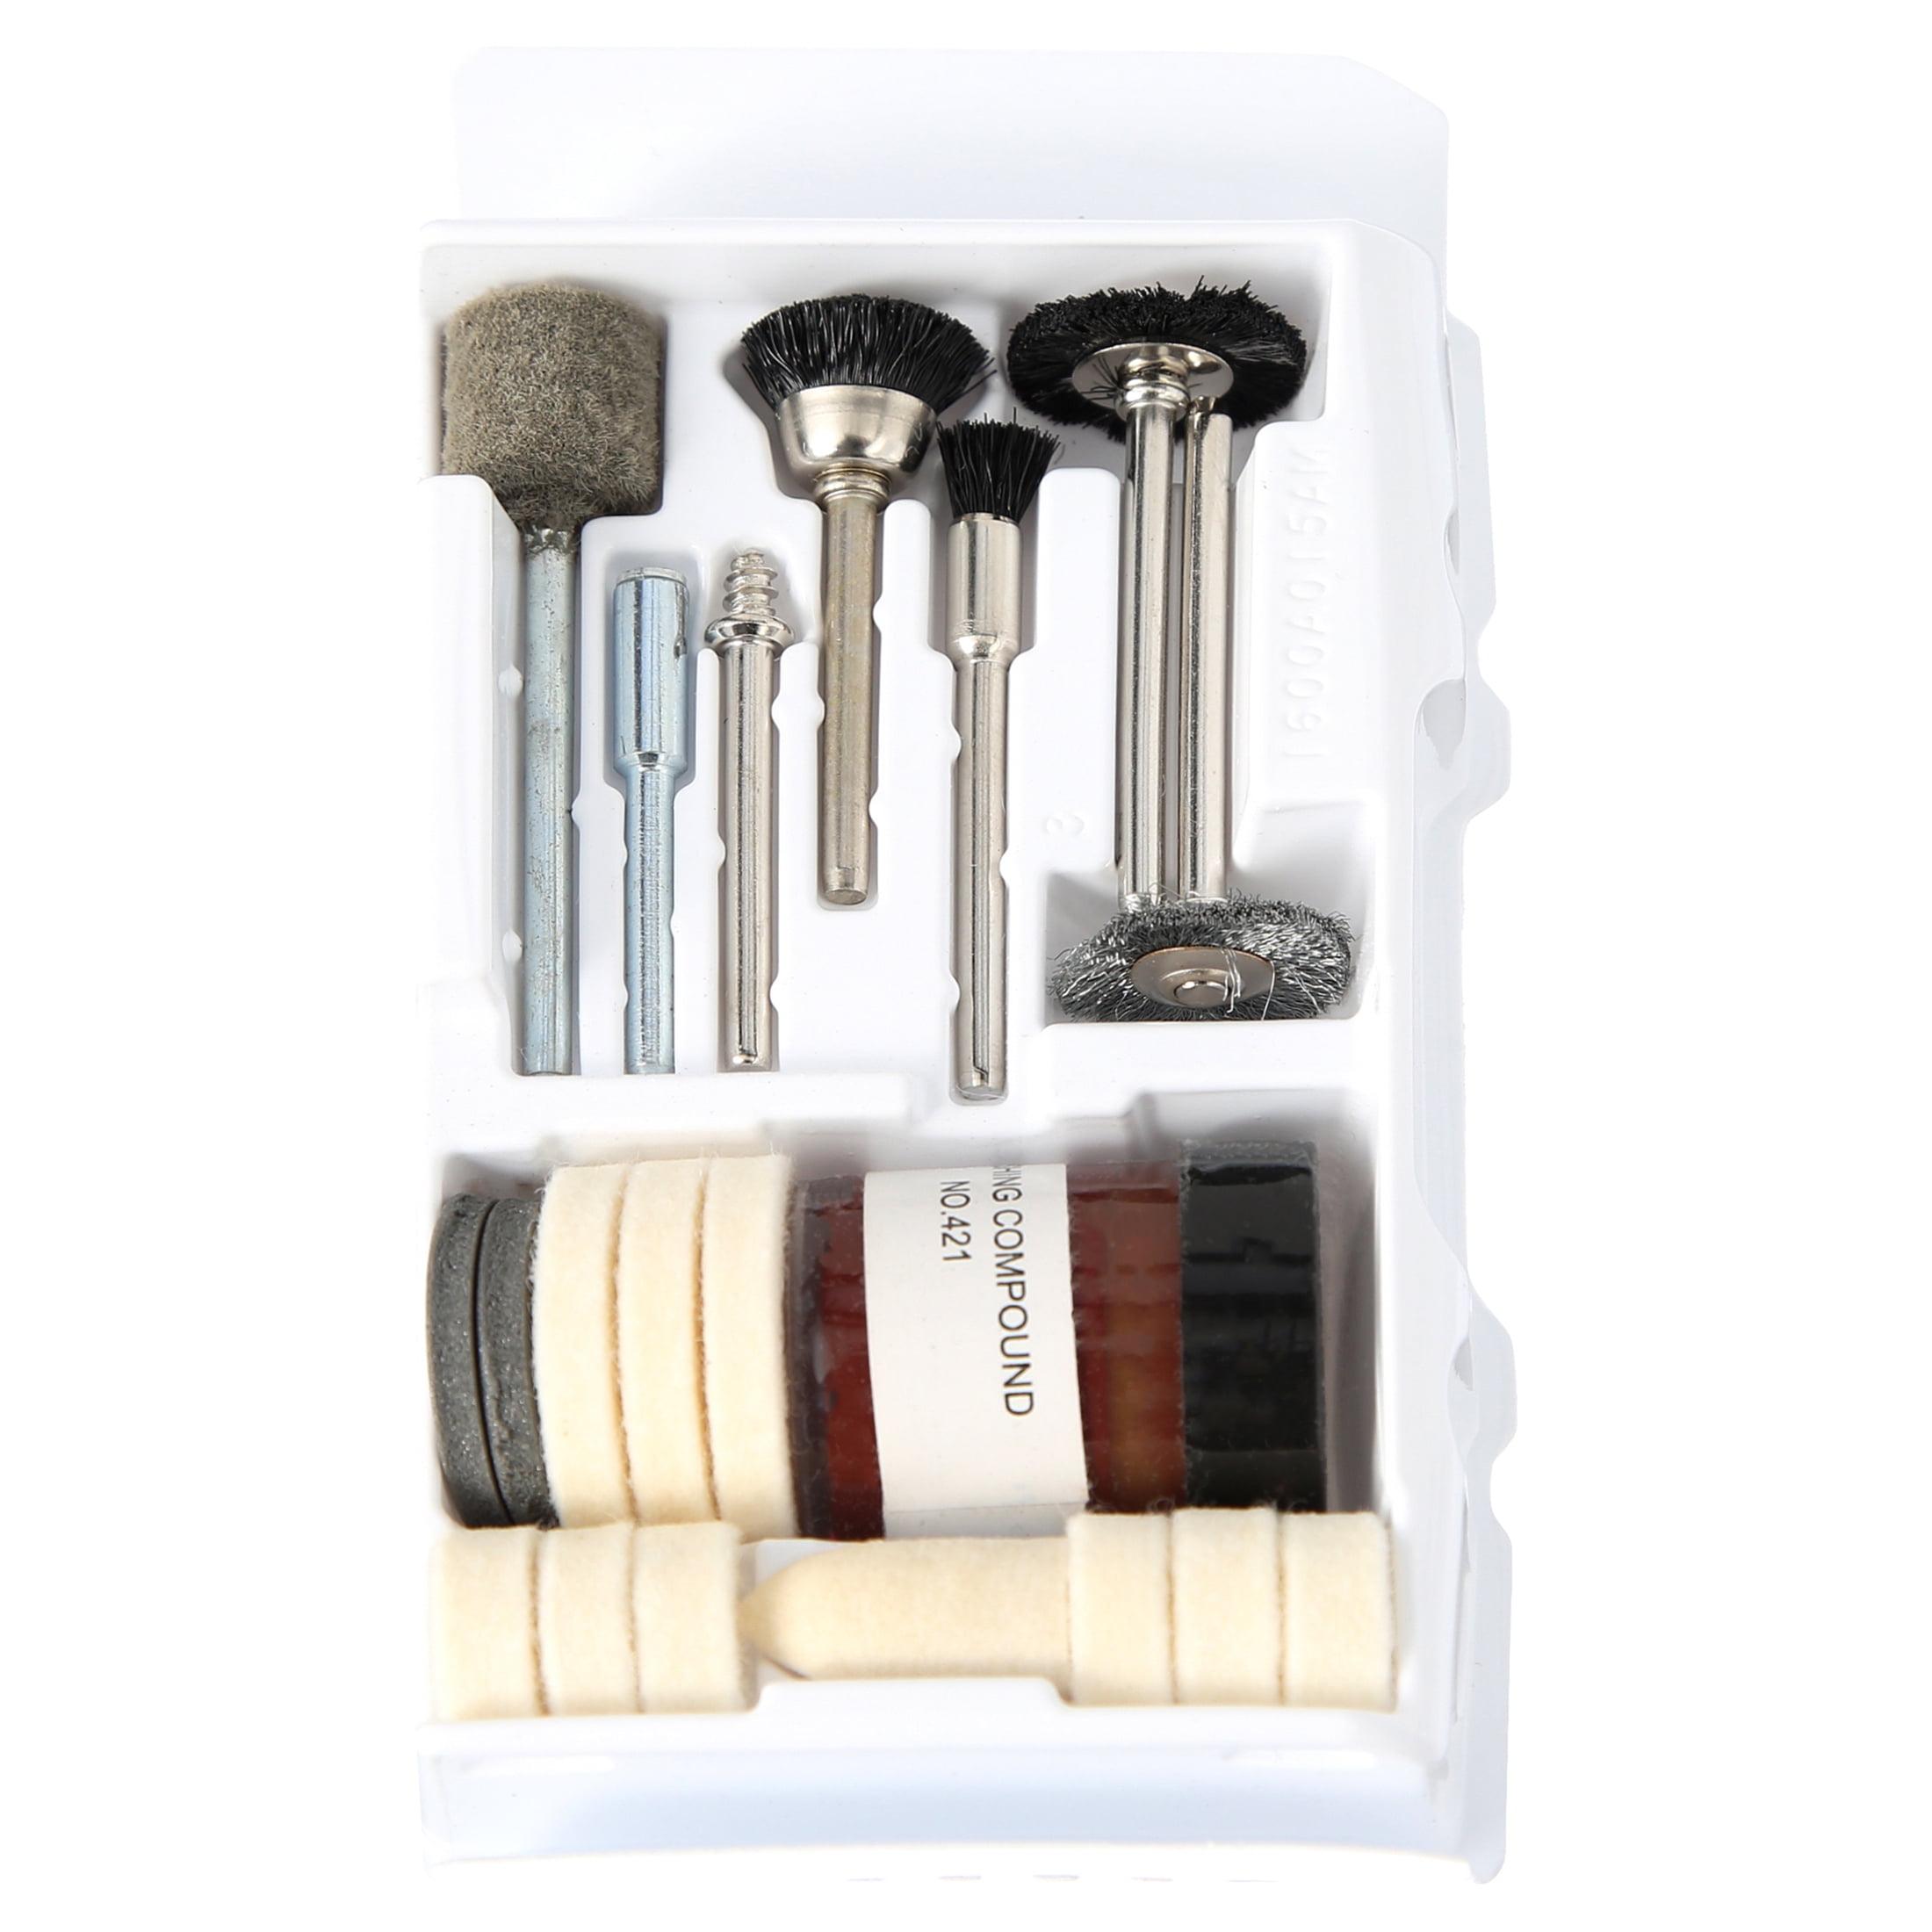 EZ726-01 8 PC EZ Lock Sanding & Polishing Rotary Accessories Kit